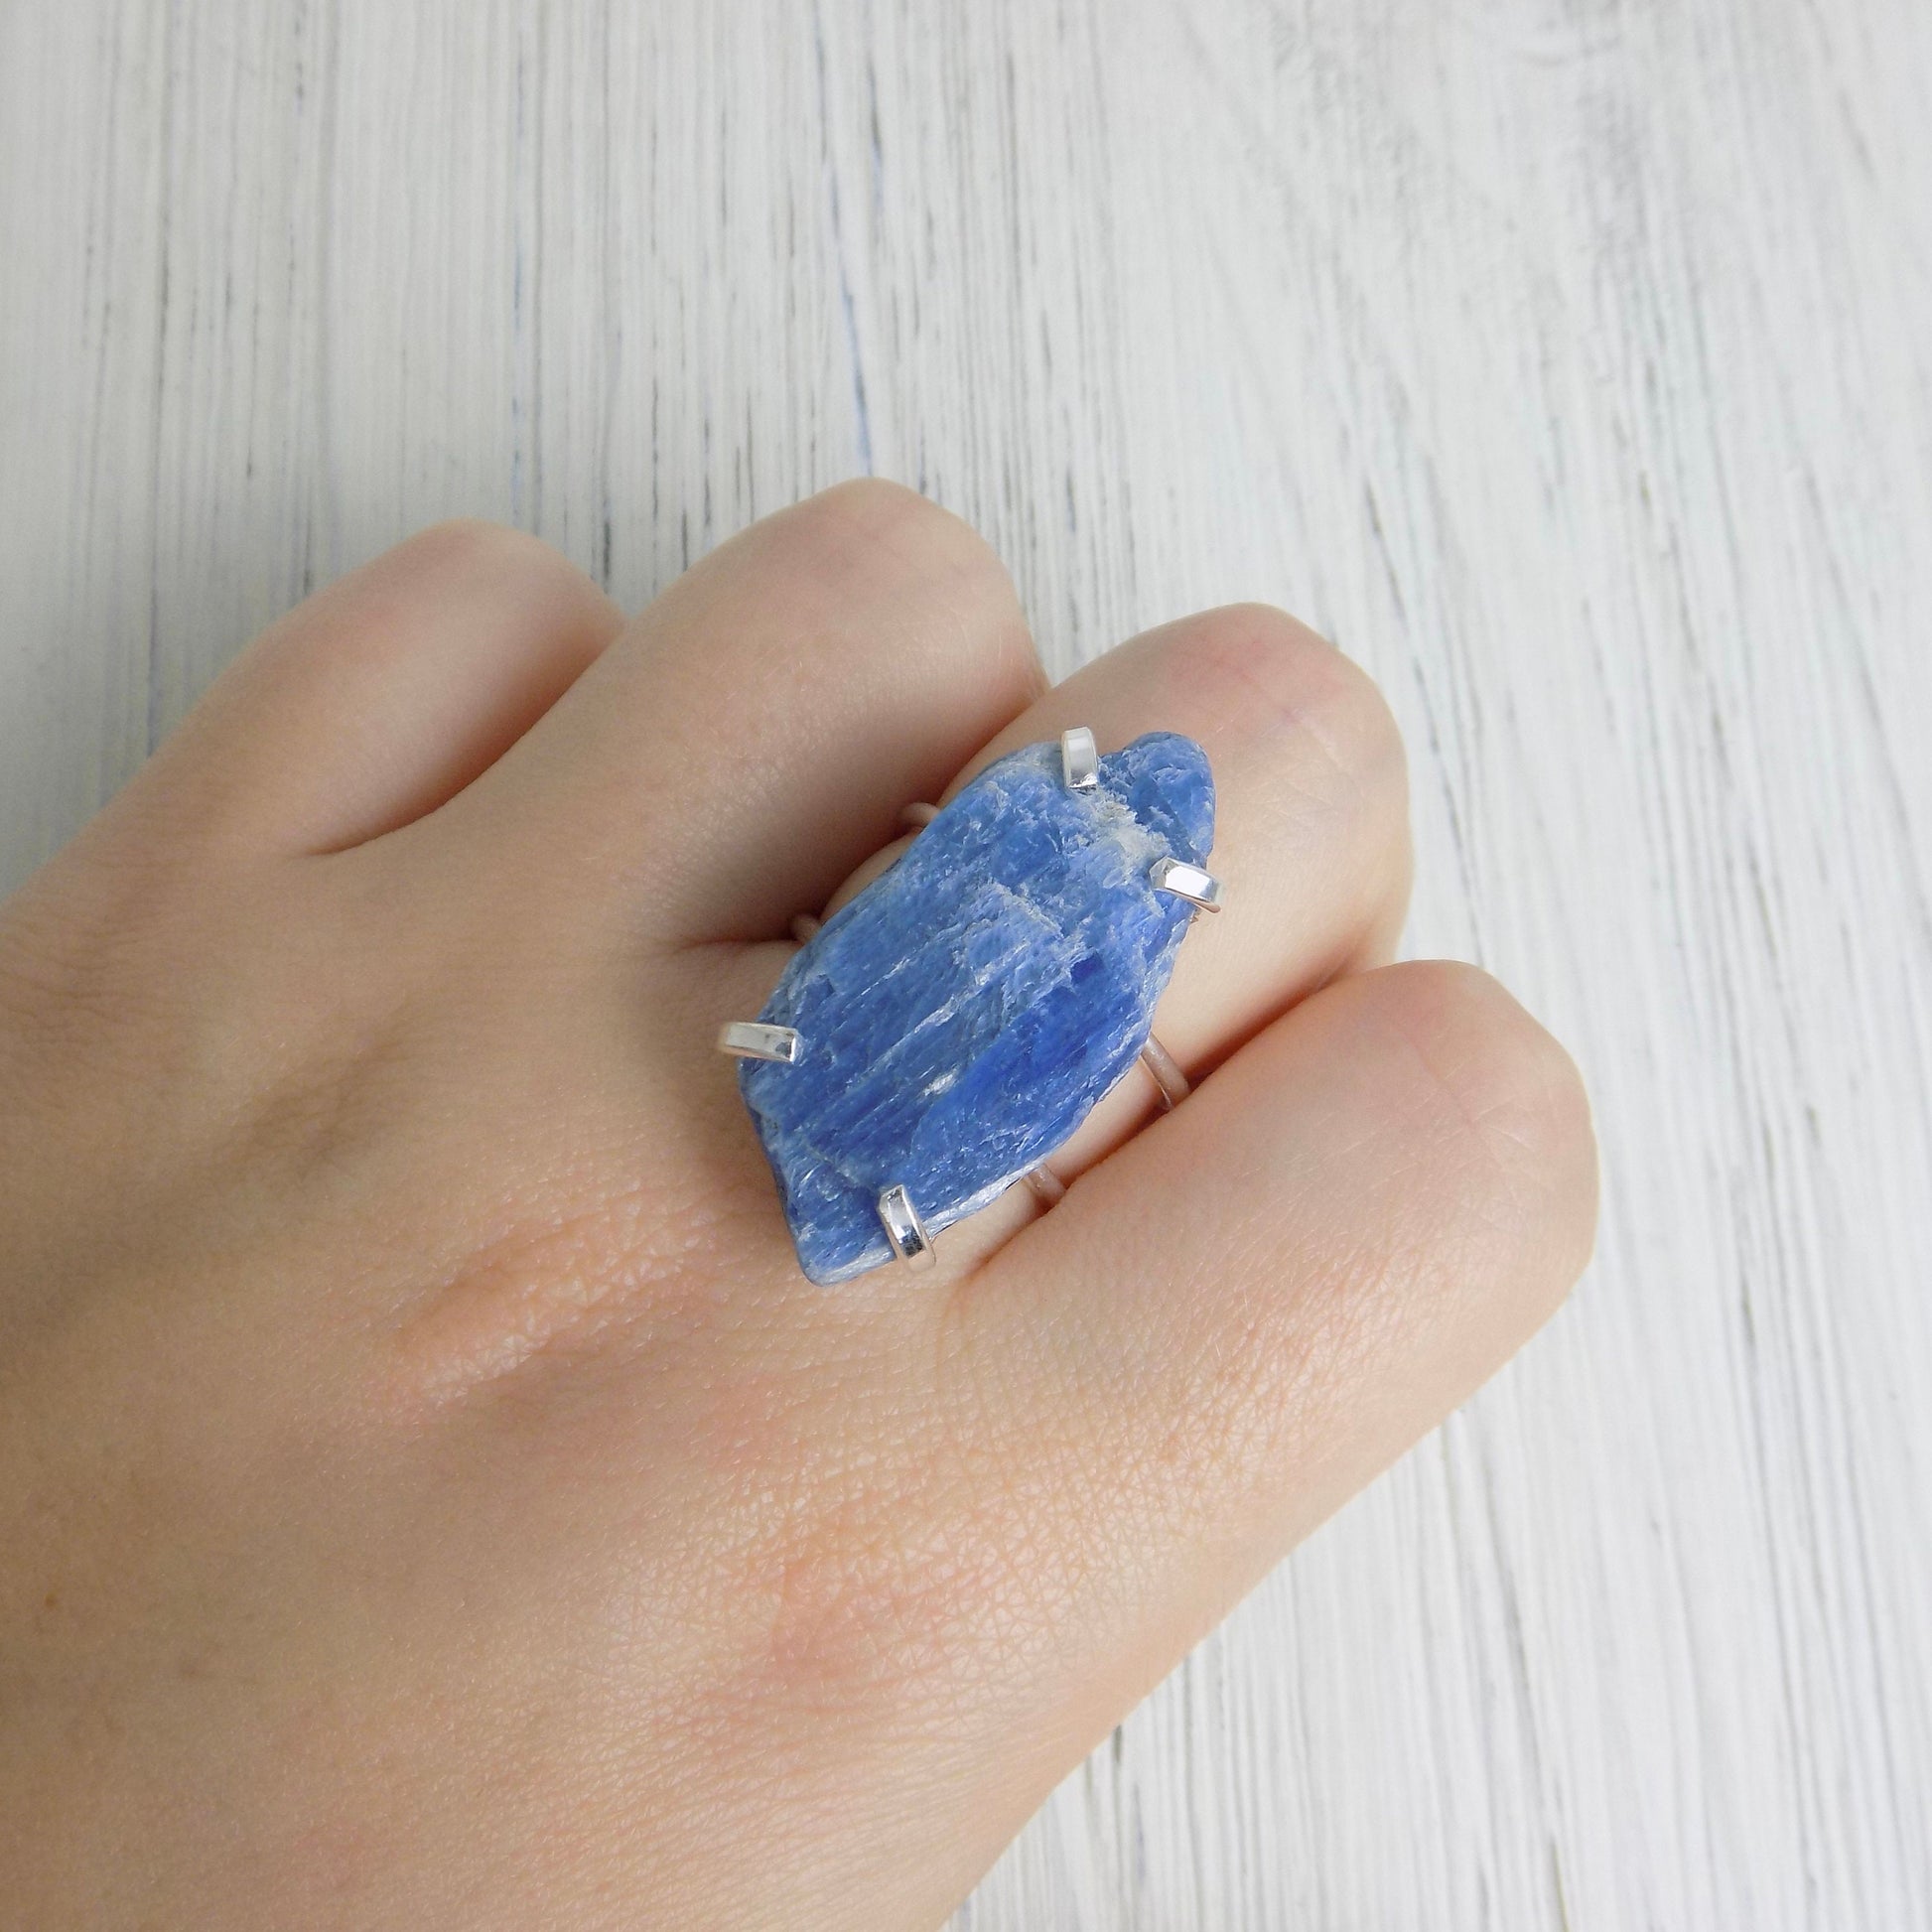 Raw Blue Kyanite Ring Silver, Adjustable Crystal Ring Large, Gifts Women, G13-355